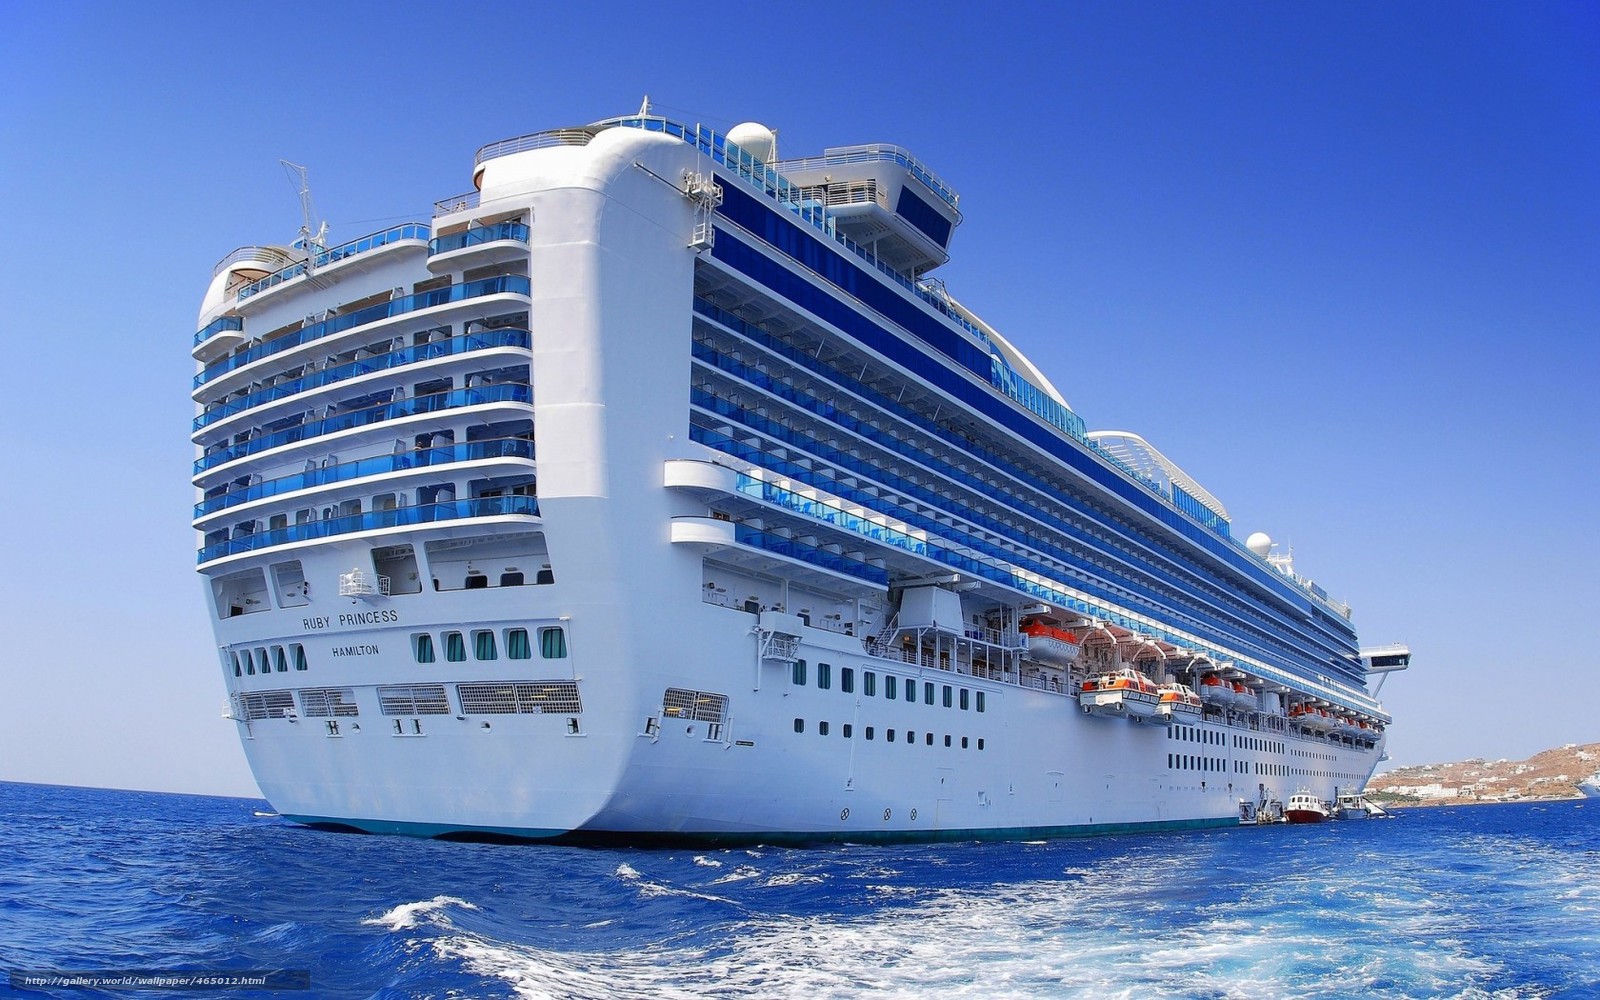 Download wallpaper ship Cruise Ship ocean free desktop wallpaper in